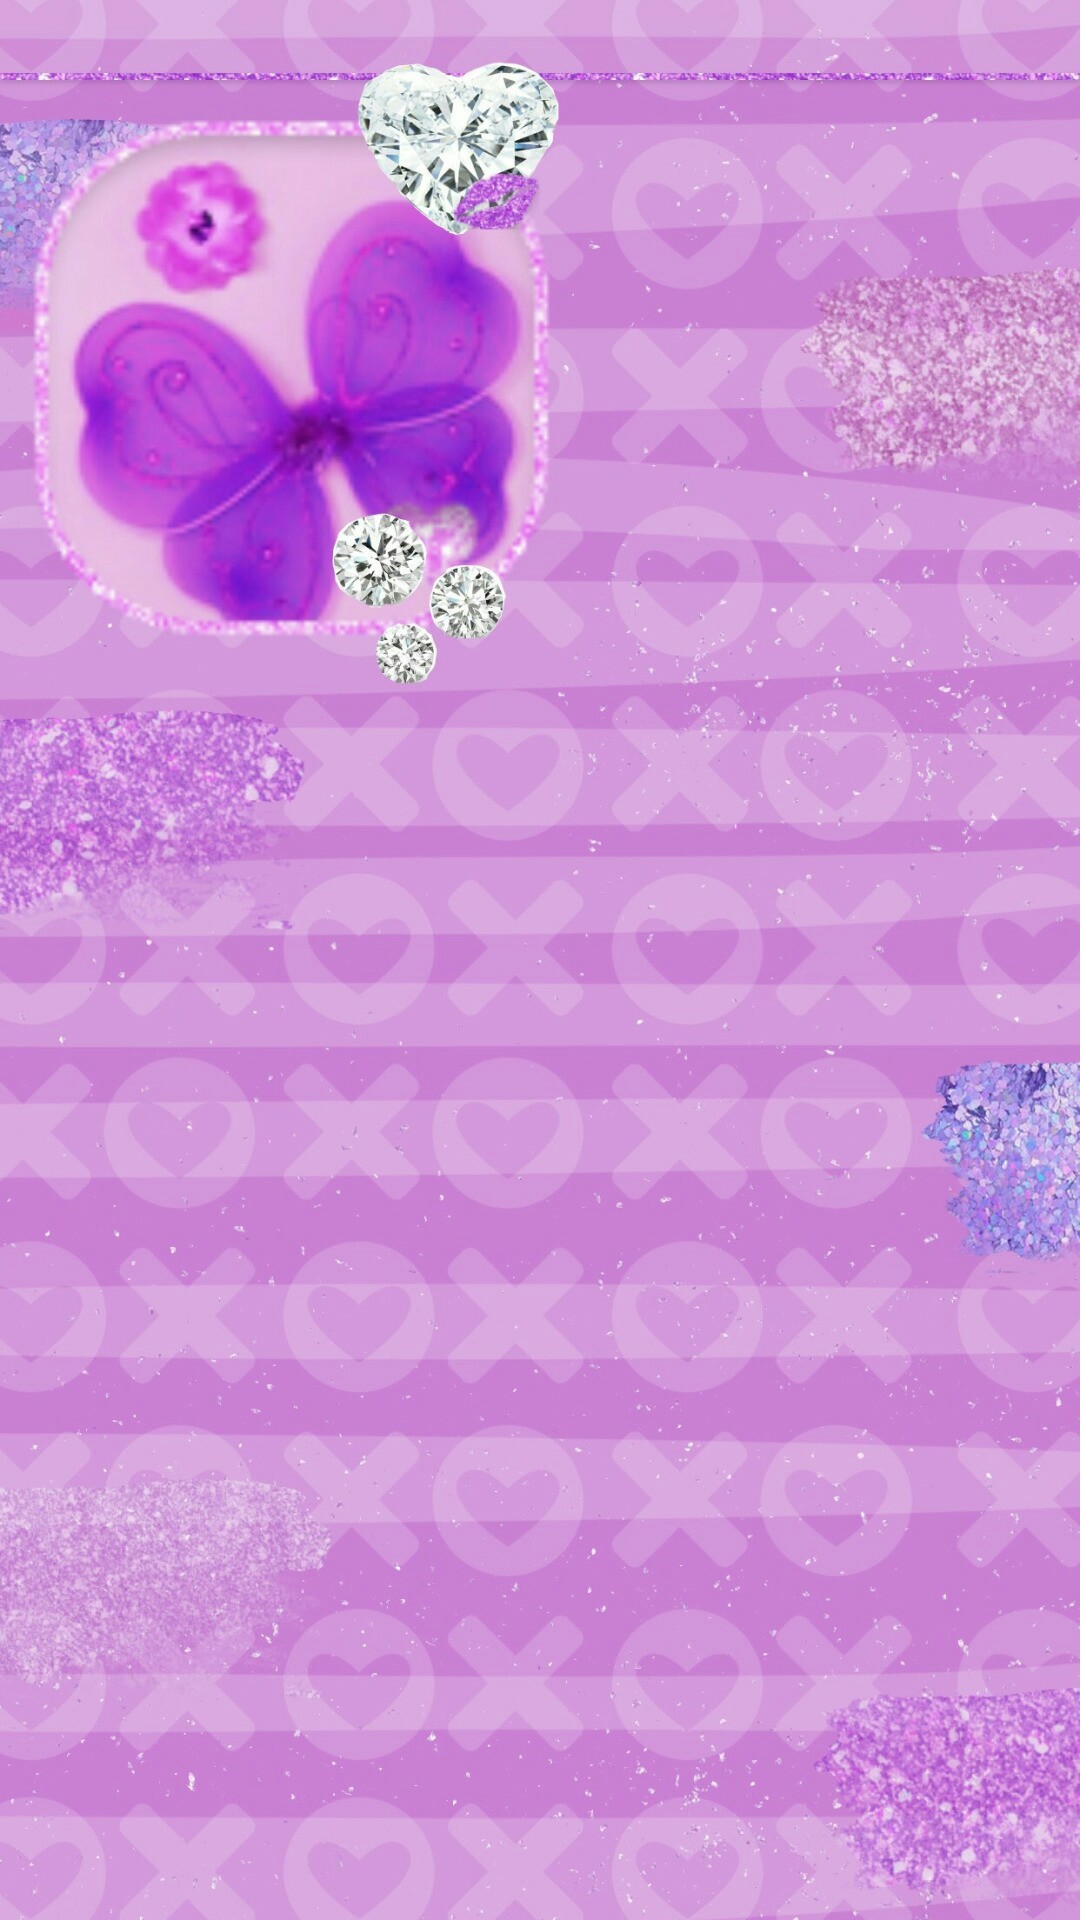 1080x1920 Glitter Wallpaper, Wallpaper Art, Purple Walls, Pretty Patterns, Phone  Wallpapers, Stationery, Kawaii, Kiss, Butterfly